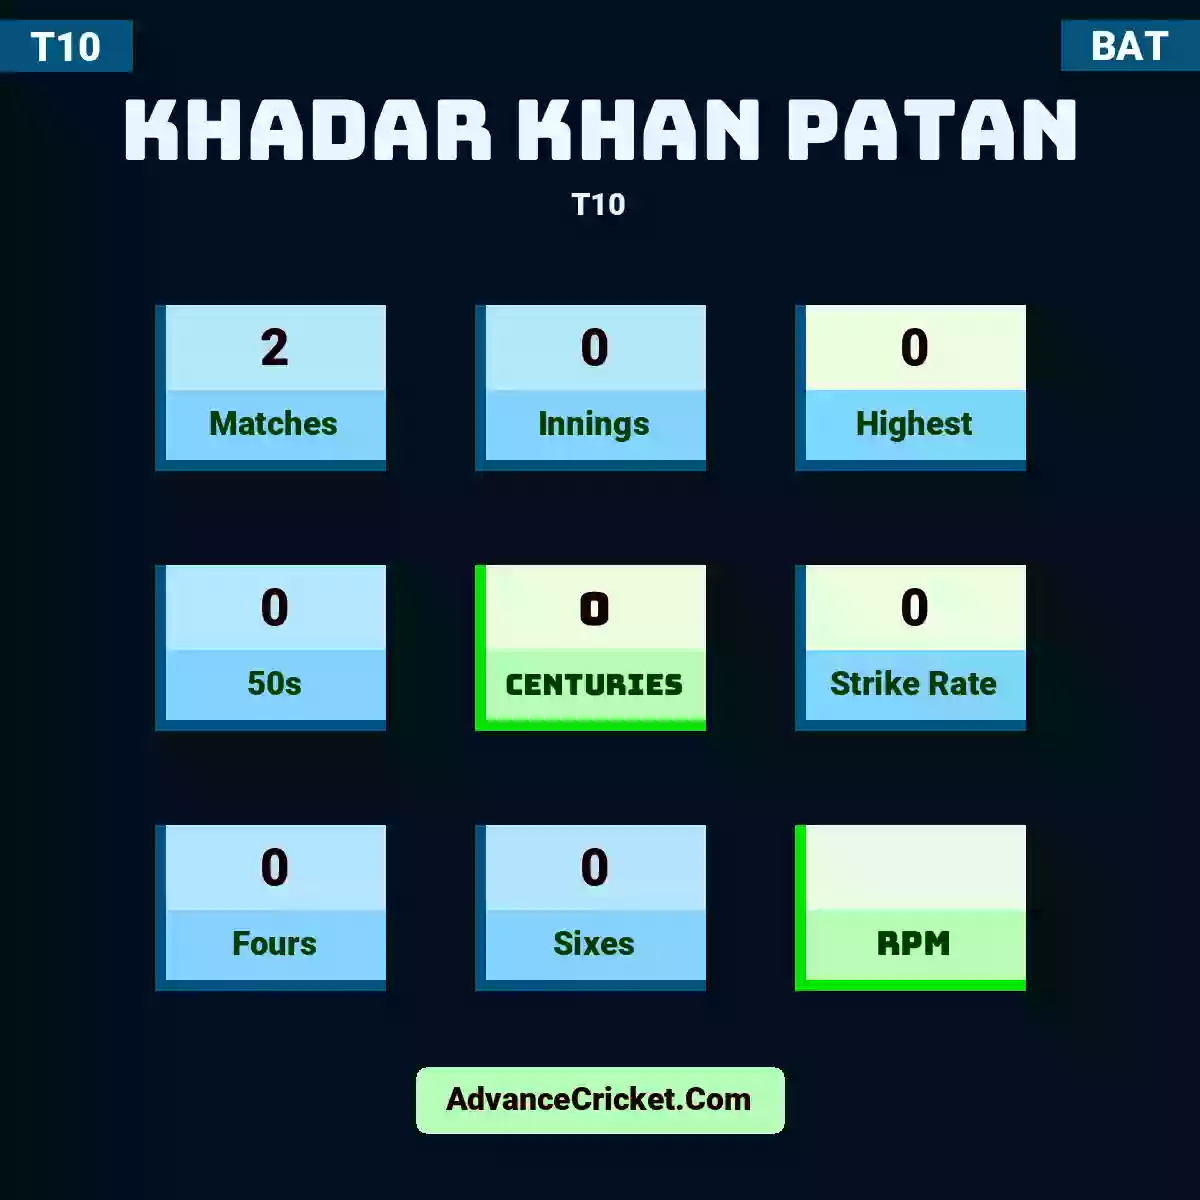 Khadar Khan Patan T10 , Khadar Khan Patan played 2 matches, scored 0 runs as highest, 0 half-centuries, and 0 centuries, with a strike rate of 0. K.Khan.Patan hit 0 fours and 0 sixes.